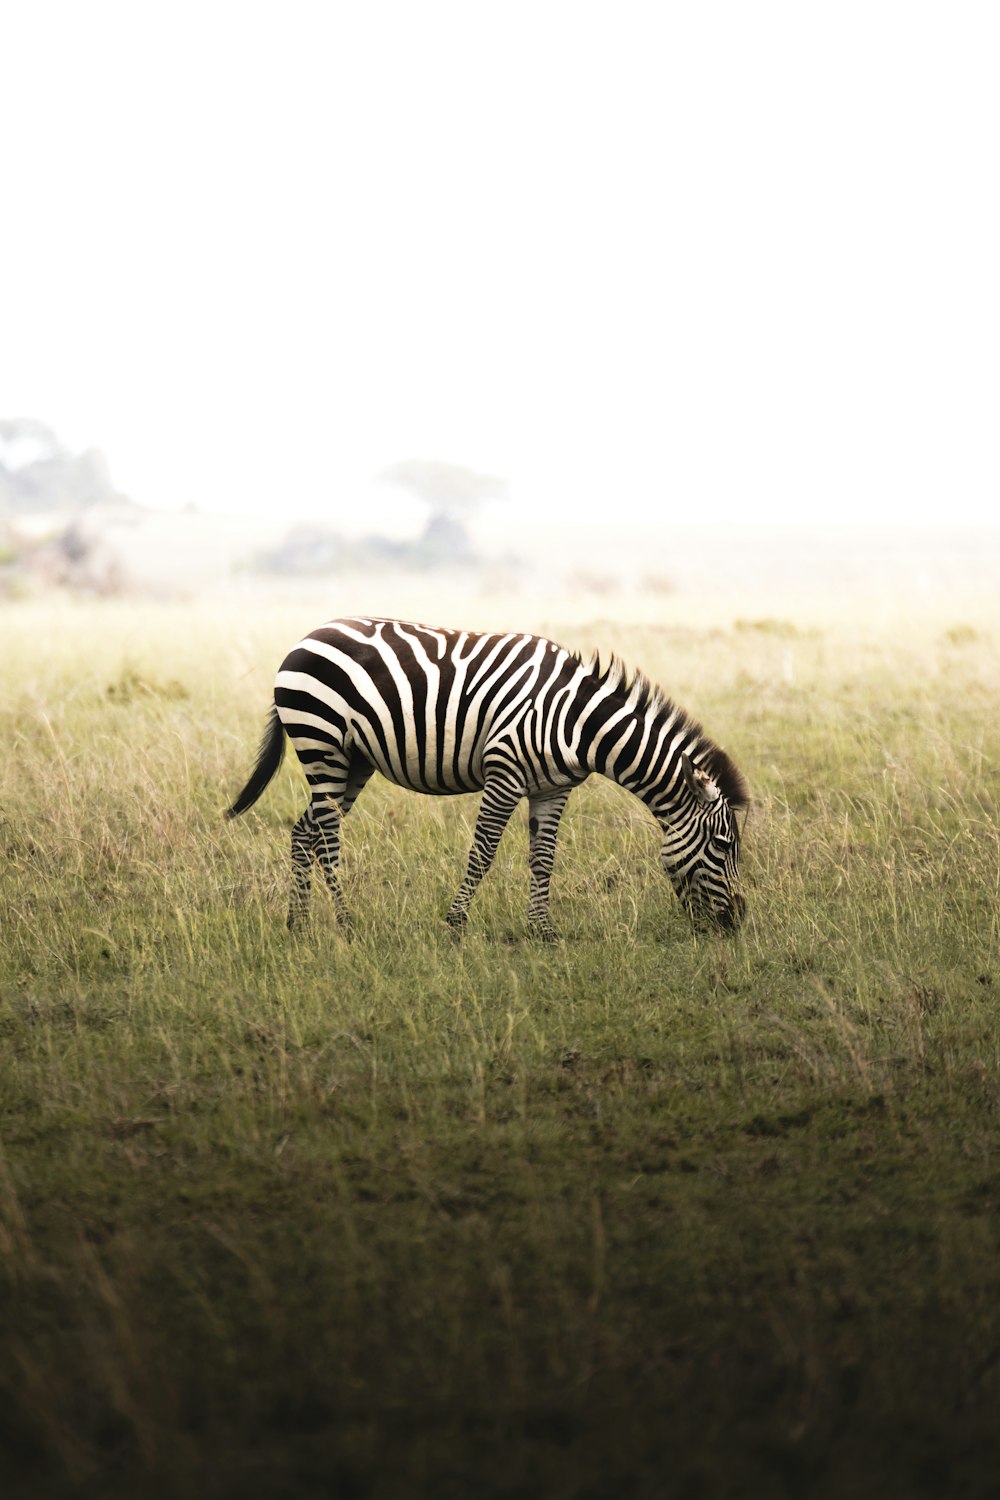 a zebra grazing in a field of tall grass